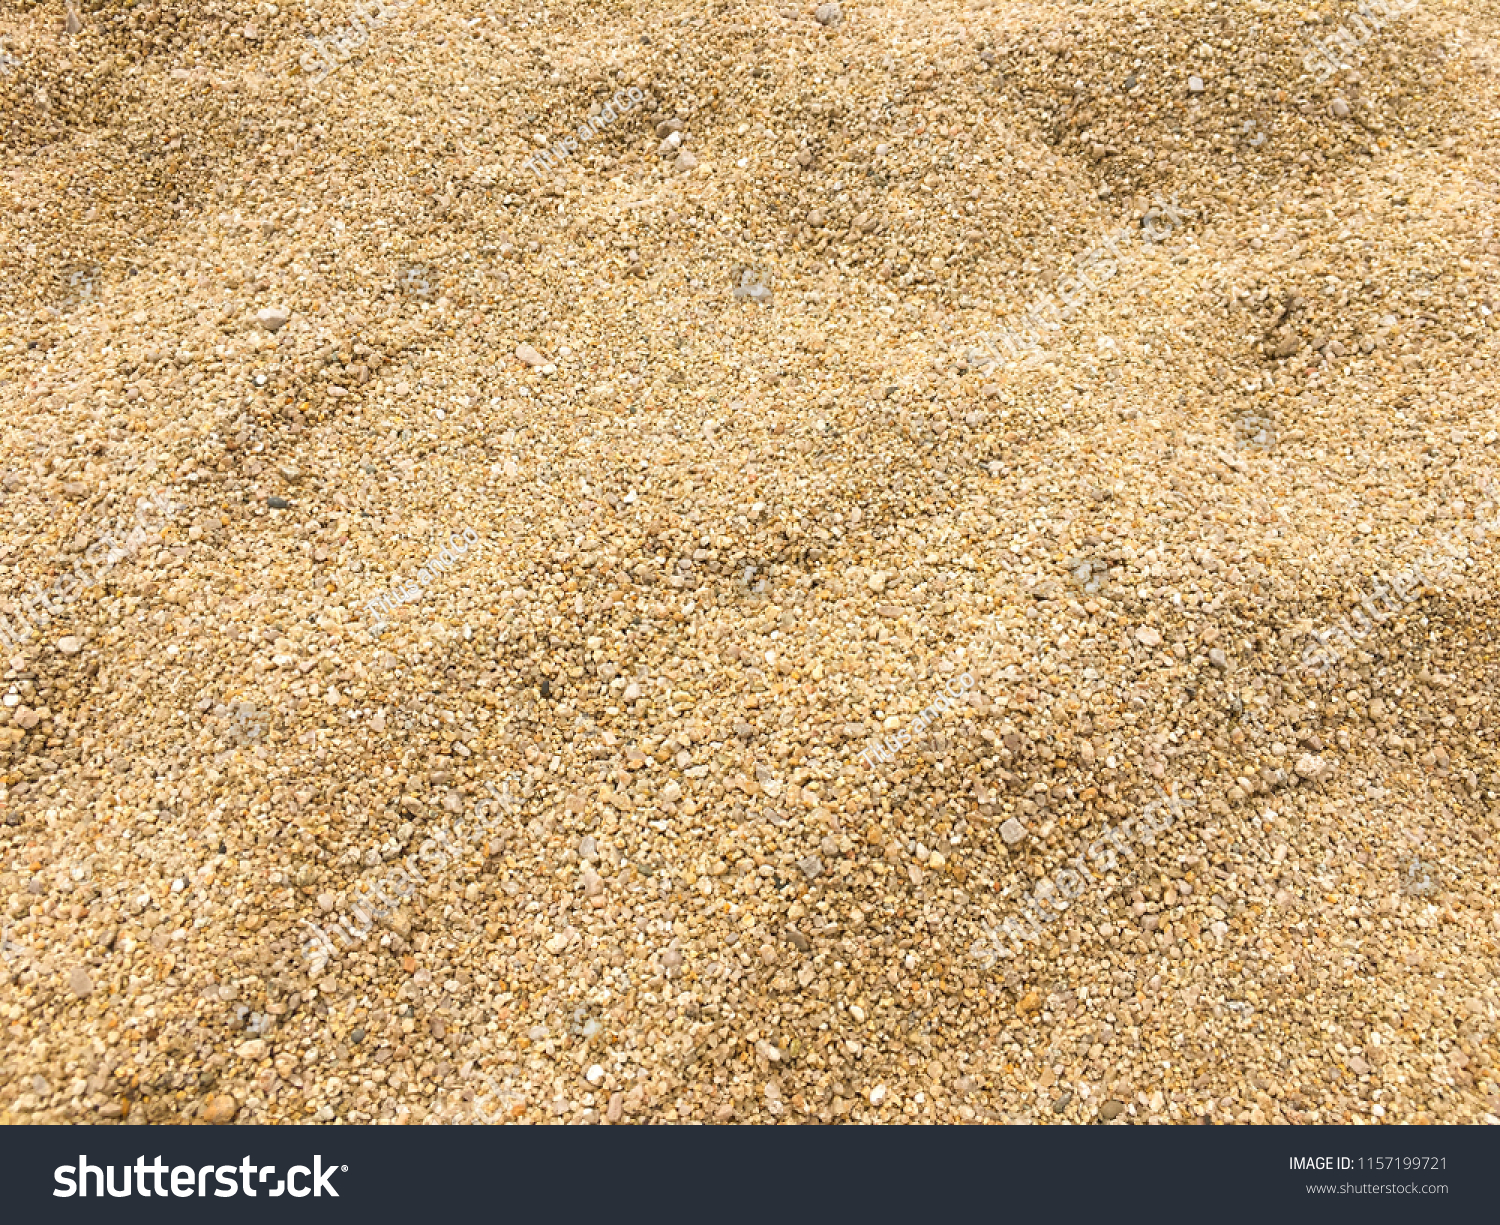 Small sea pebbles background, gravel. Stones pebble background texture. #1157199721